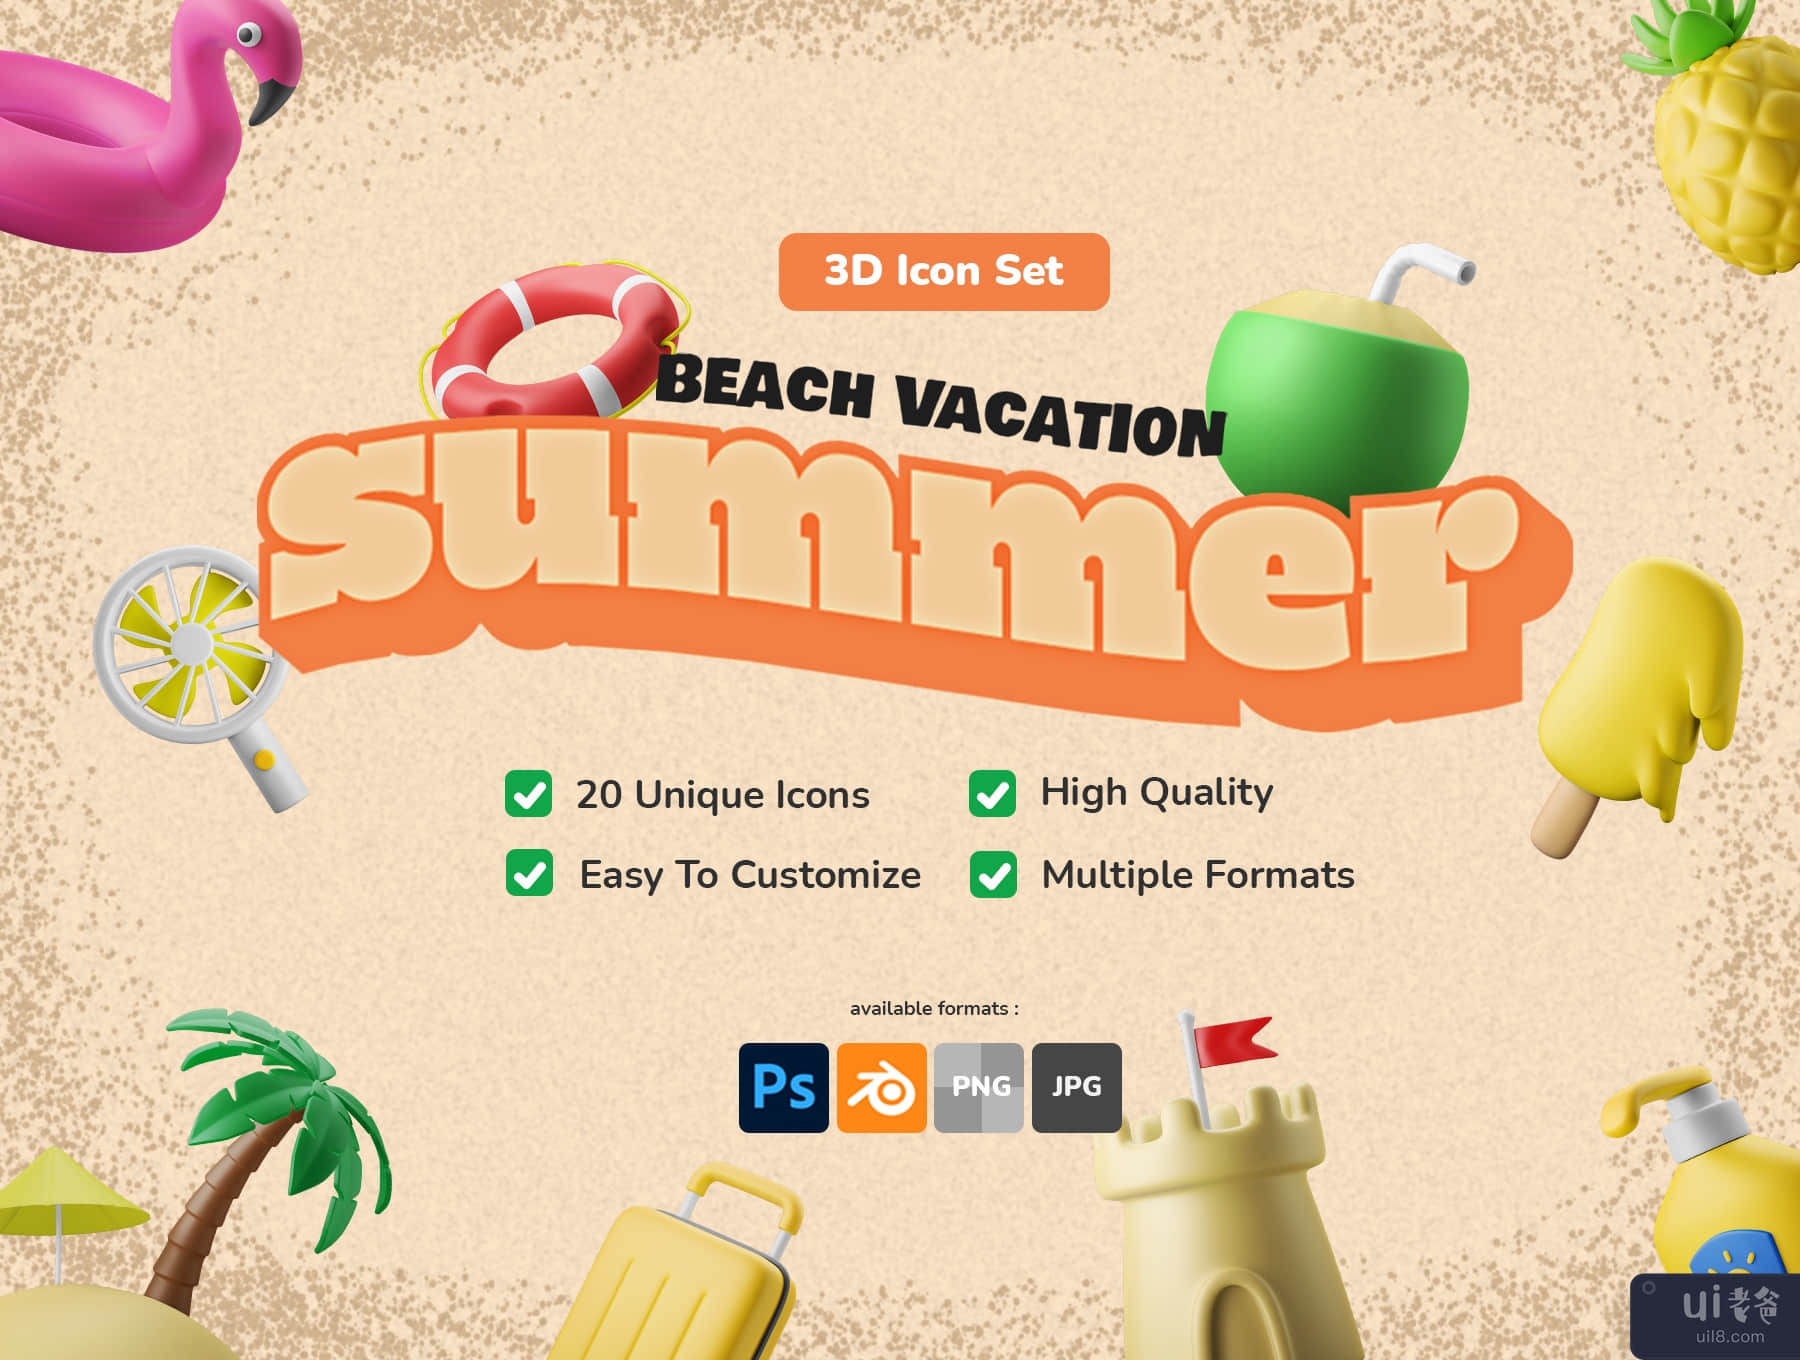 3D 图标集 - 夏季主题海滩假期 (3D Icon Set - Summer Theme Beach Vacation)插图7